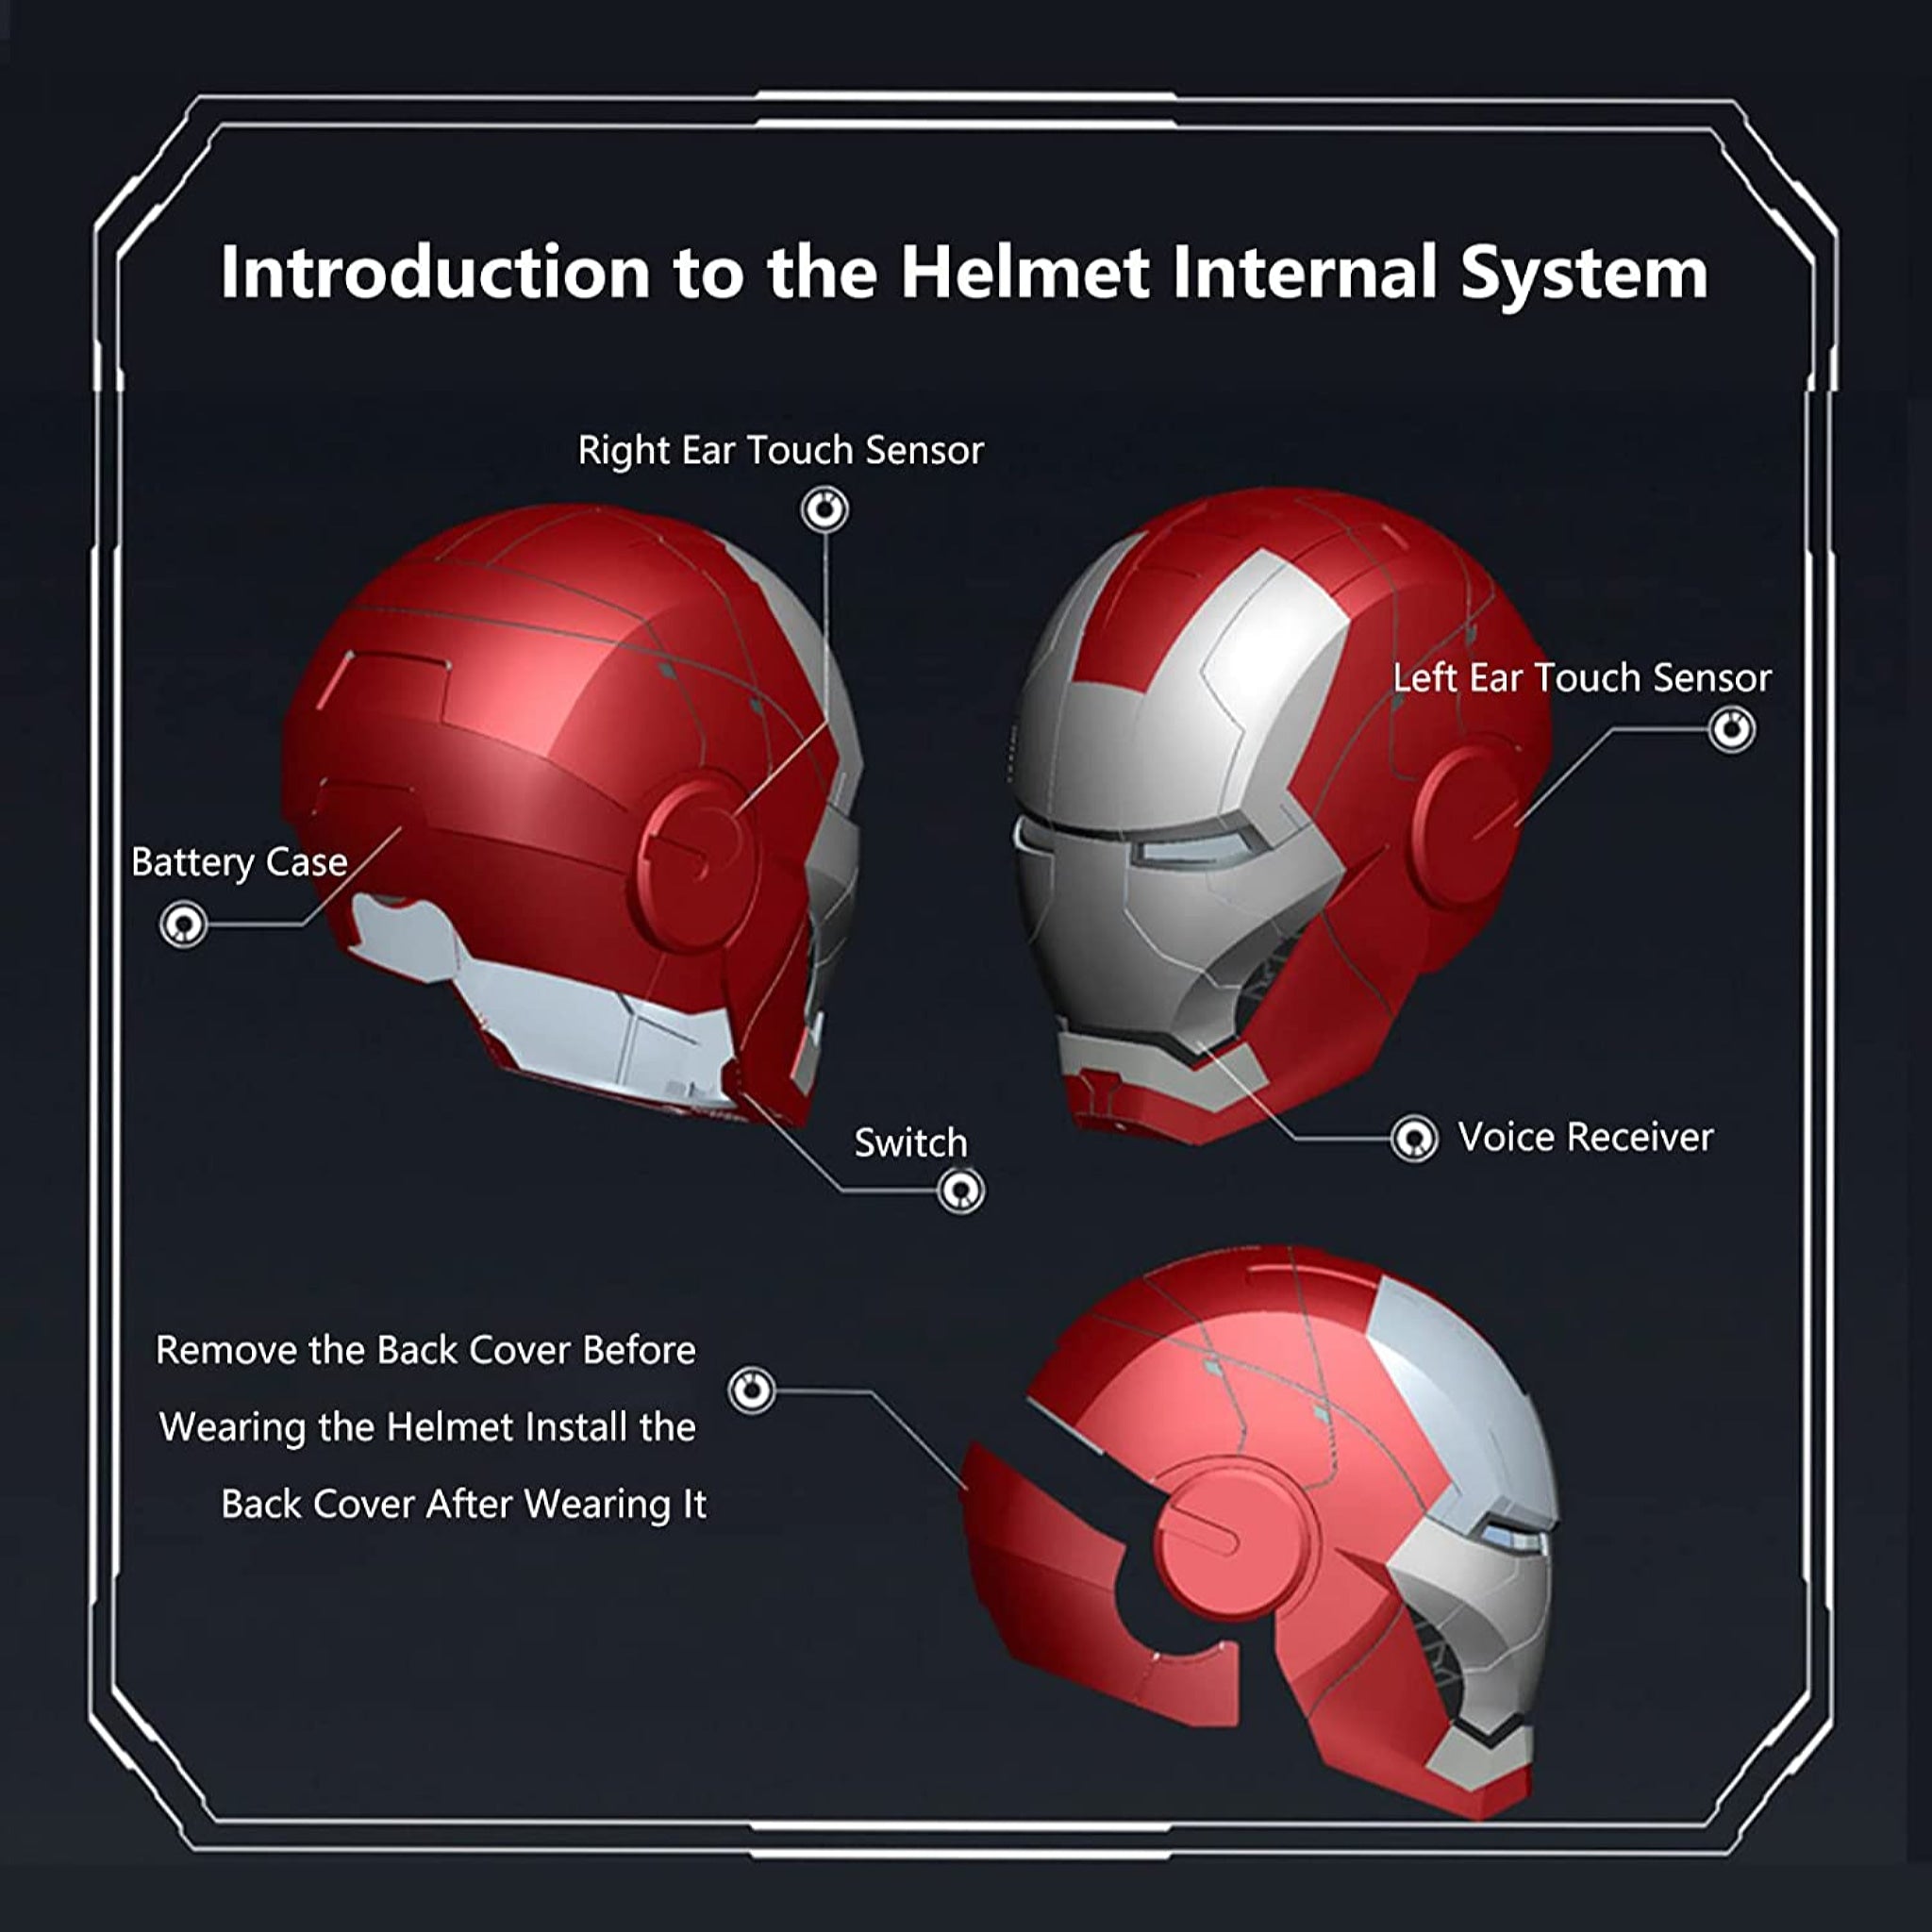 Marvel Iron Man 2 Mark V Armor Electronic Helmet Voice Activated Replica